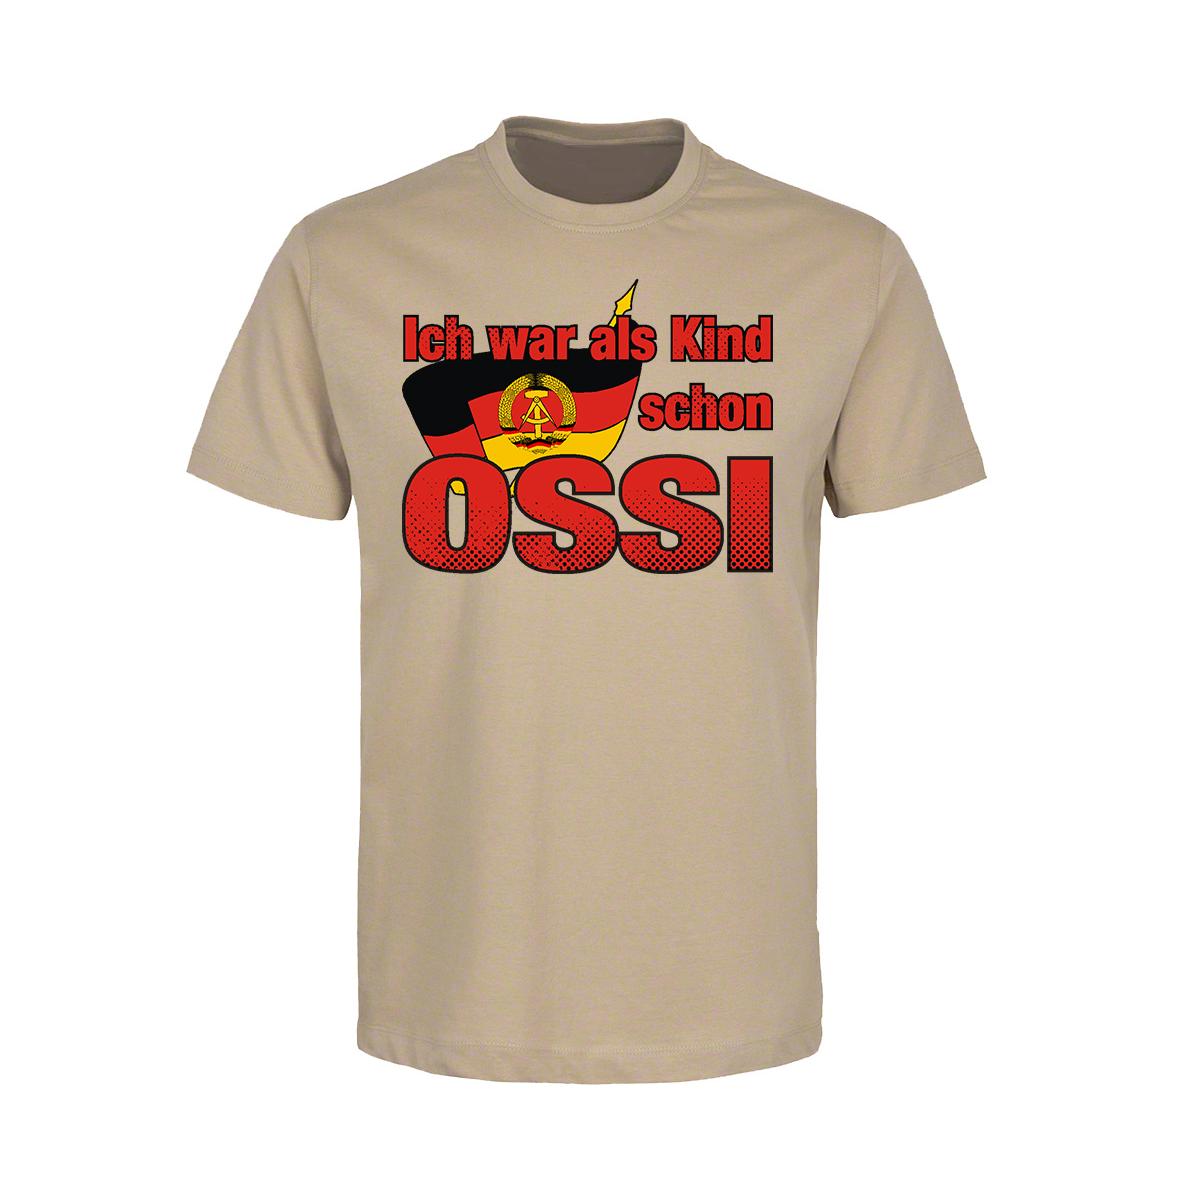 Ich war als Kind schon Ossi - Männer T-Shirt - beige